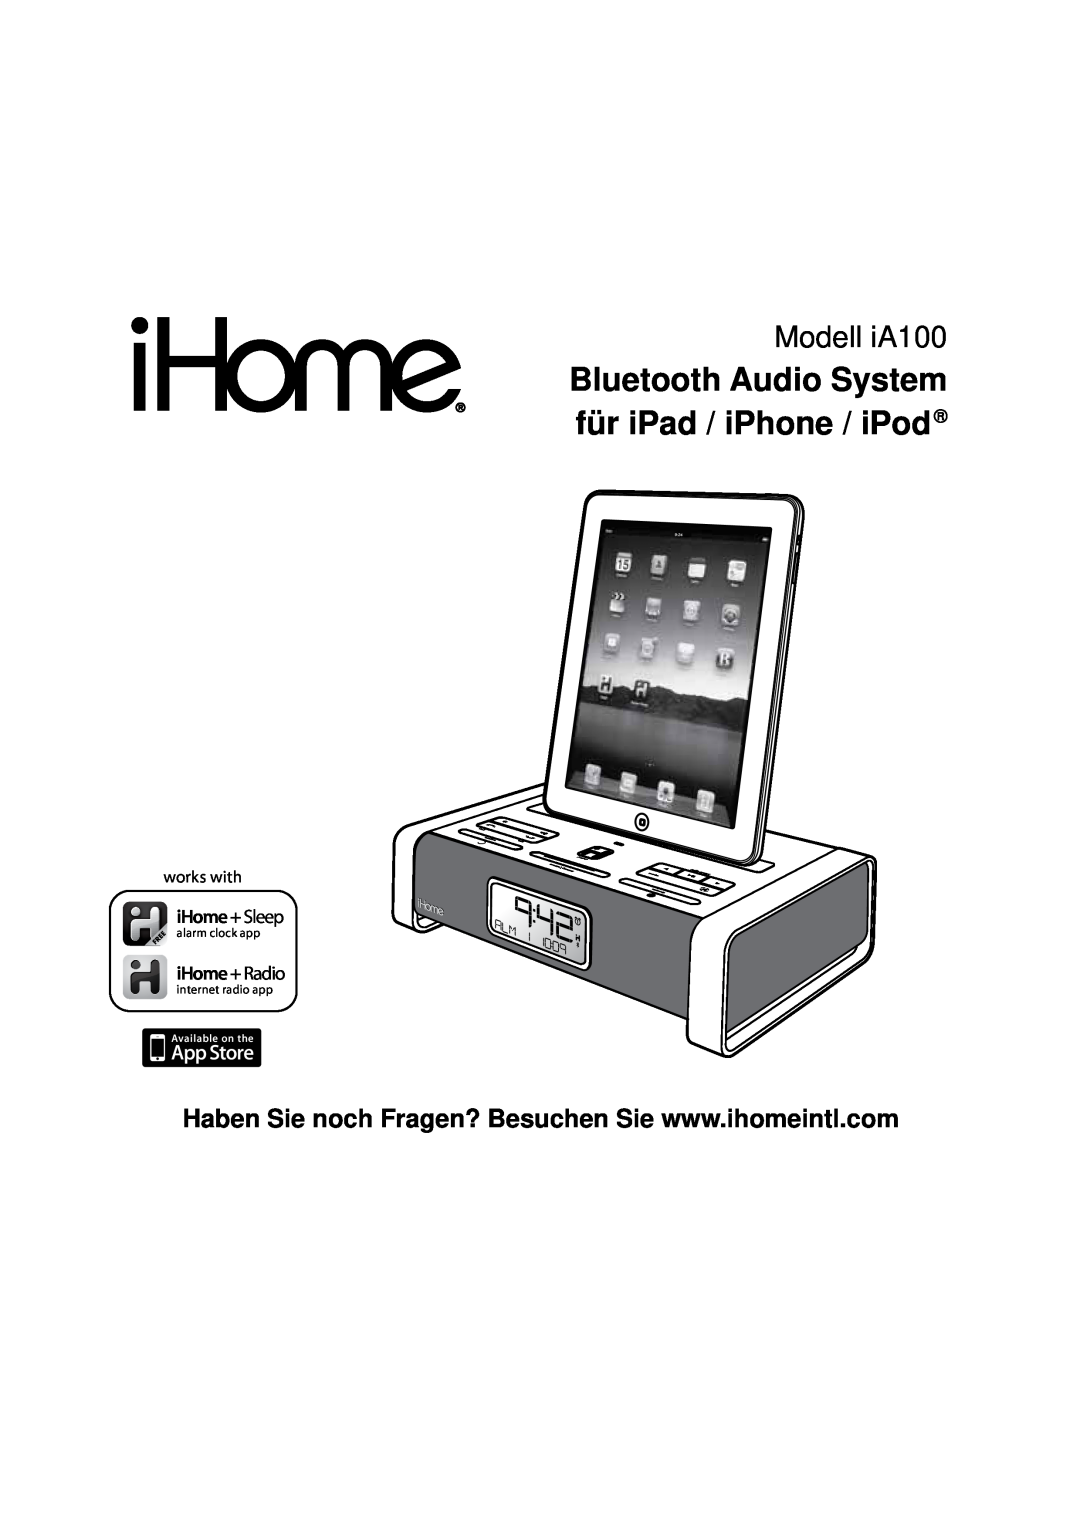 iHome manual Bluetooth Audio System für iPad / iPhone / iPod, Modell iA100, iHome + Sleep, iHome + Radio, works with 